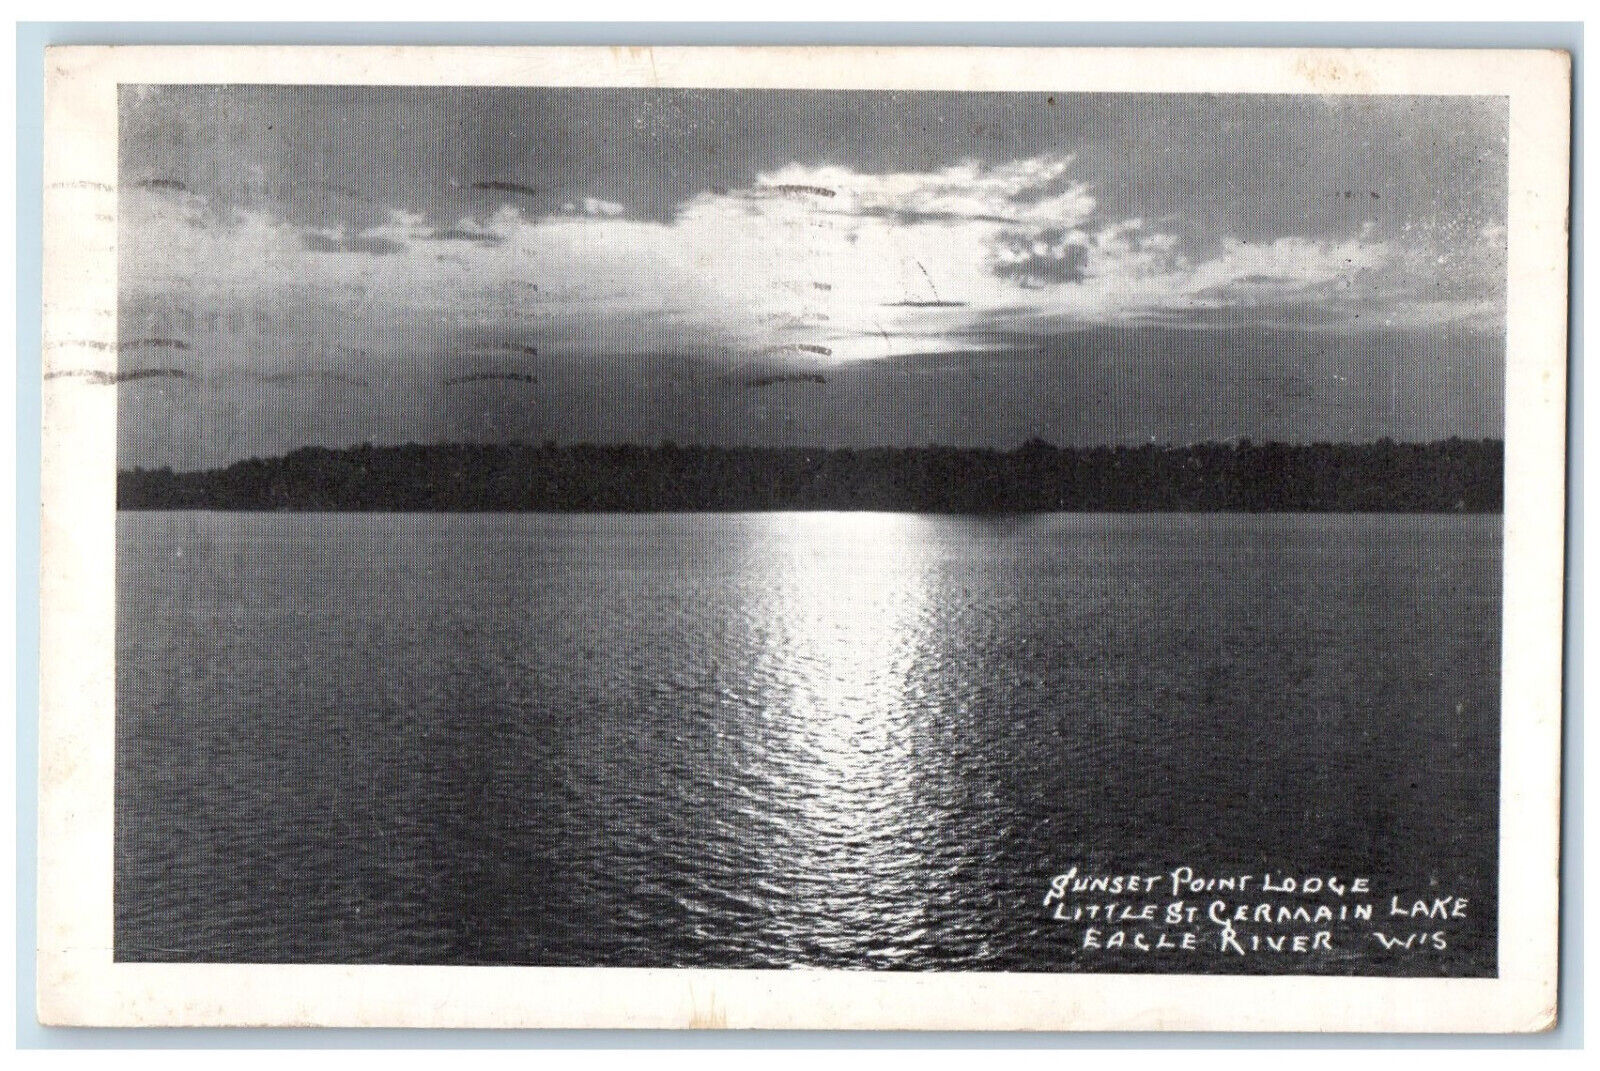 1948 Sunset Point Lodge Little St. Germain Lake Eagle River WI Postcard